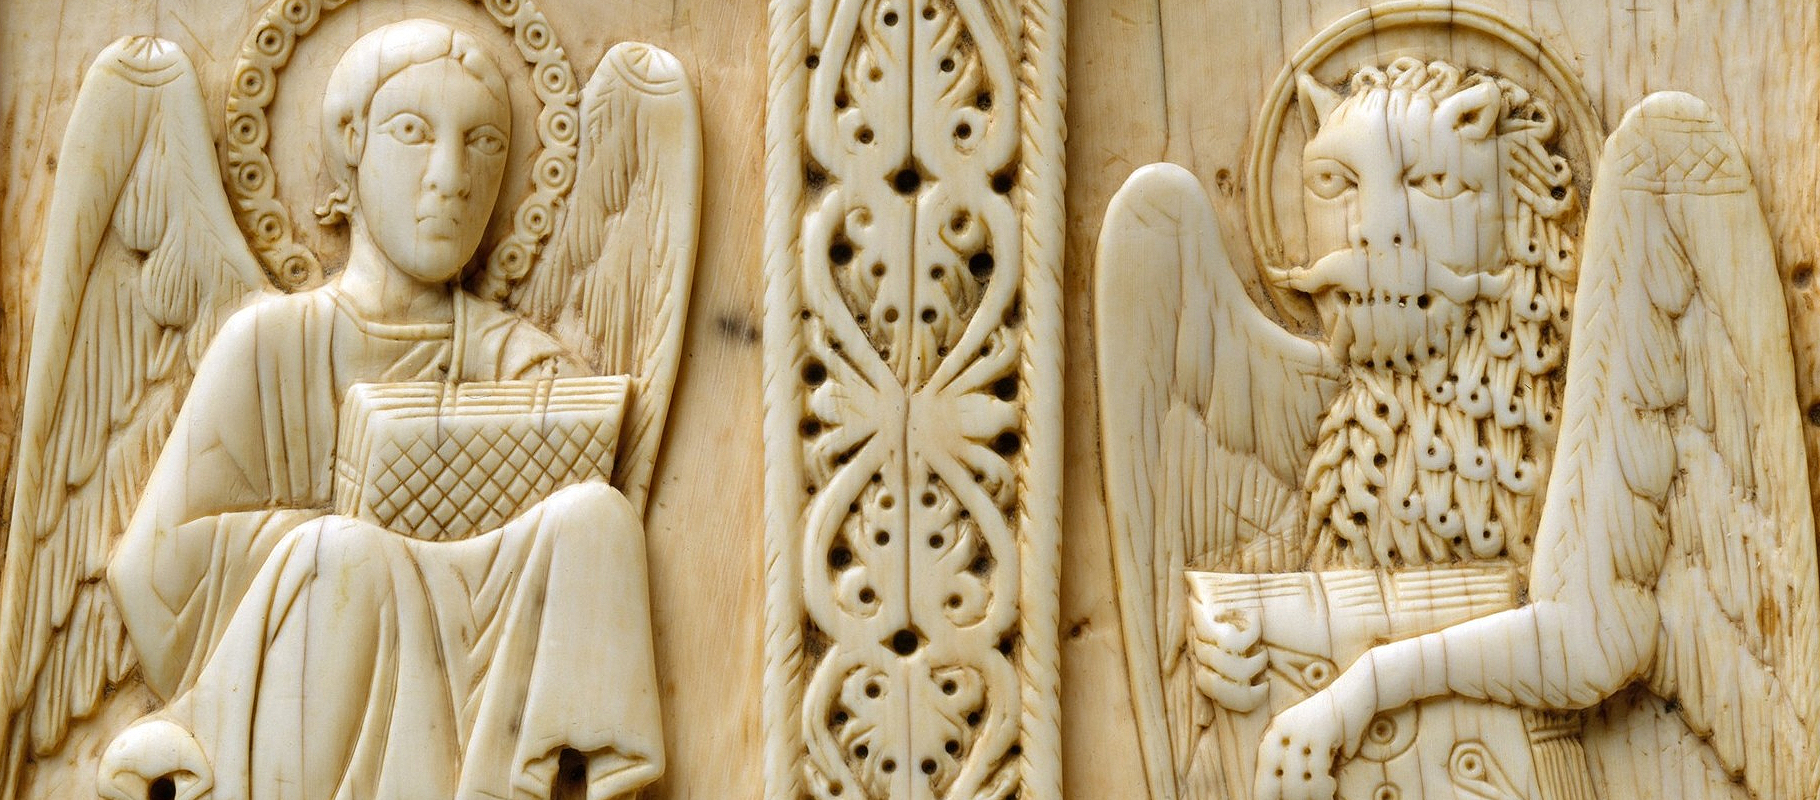 9th century ivory